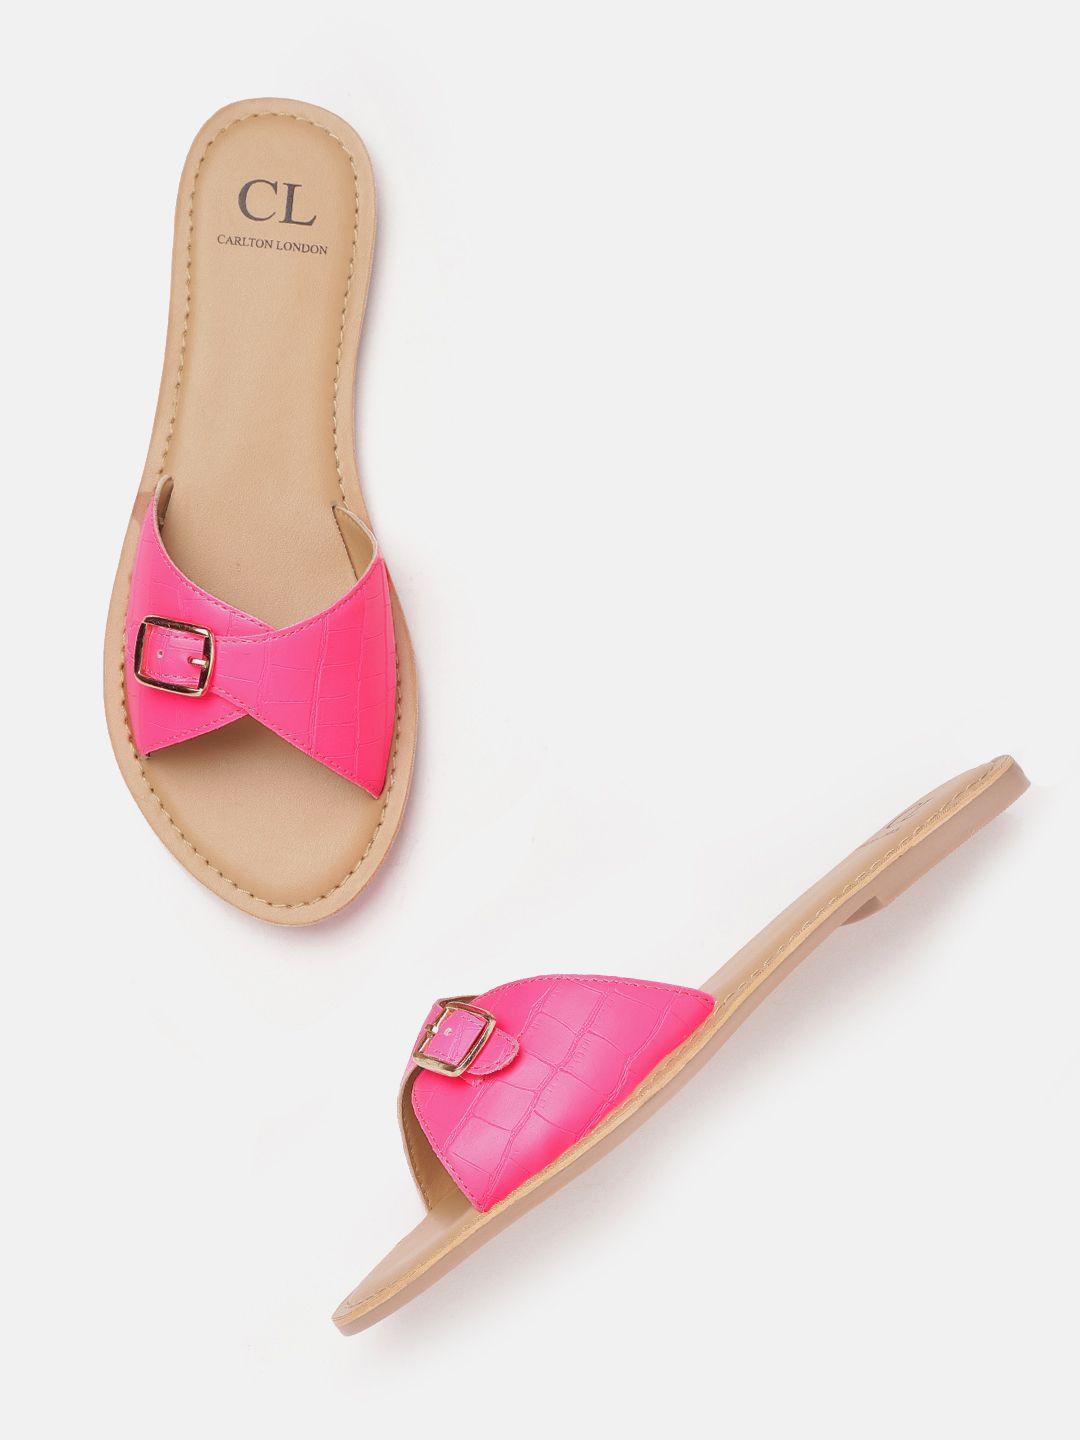 carlton-london-women-pink-croc-textured-flats-with-buckles